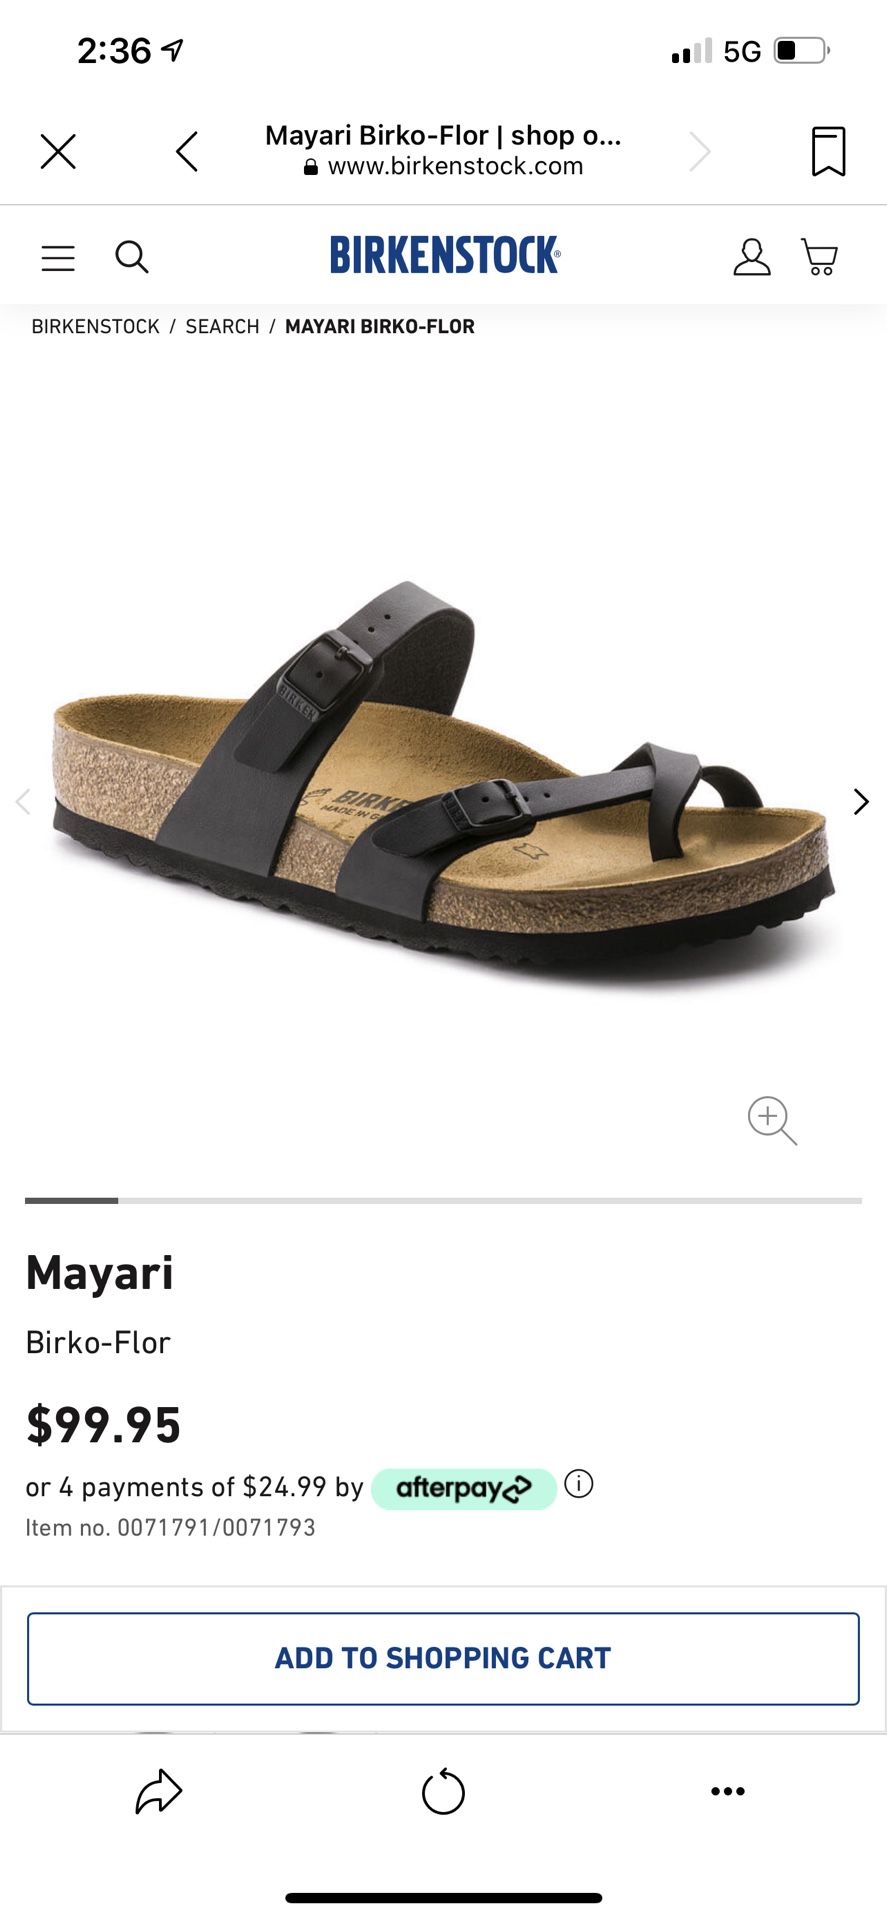 MAYARI BIRKO-FLOR, Size 38 (7-7 1/2 W)